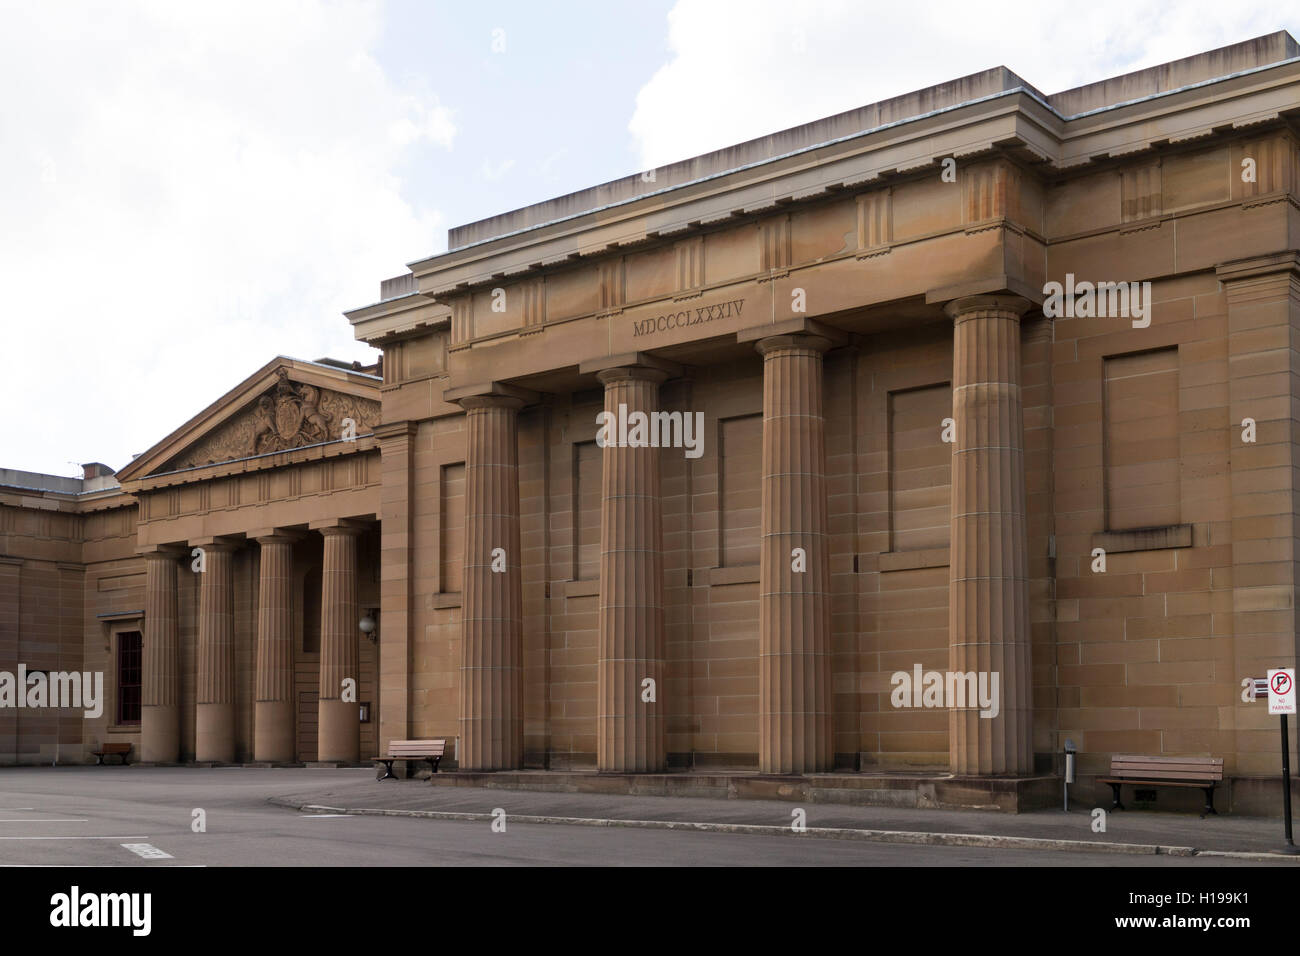 Portico and columns of the Darlinghurst Court House Sydney Australia Stock Photo